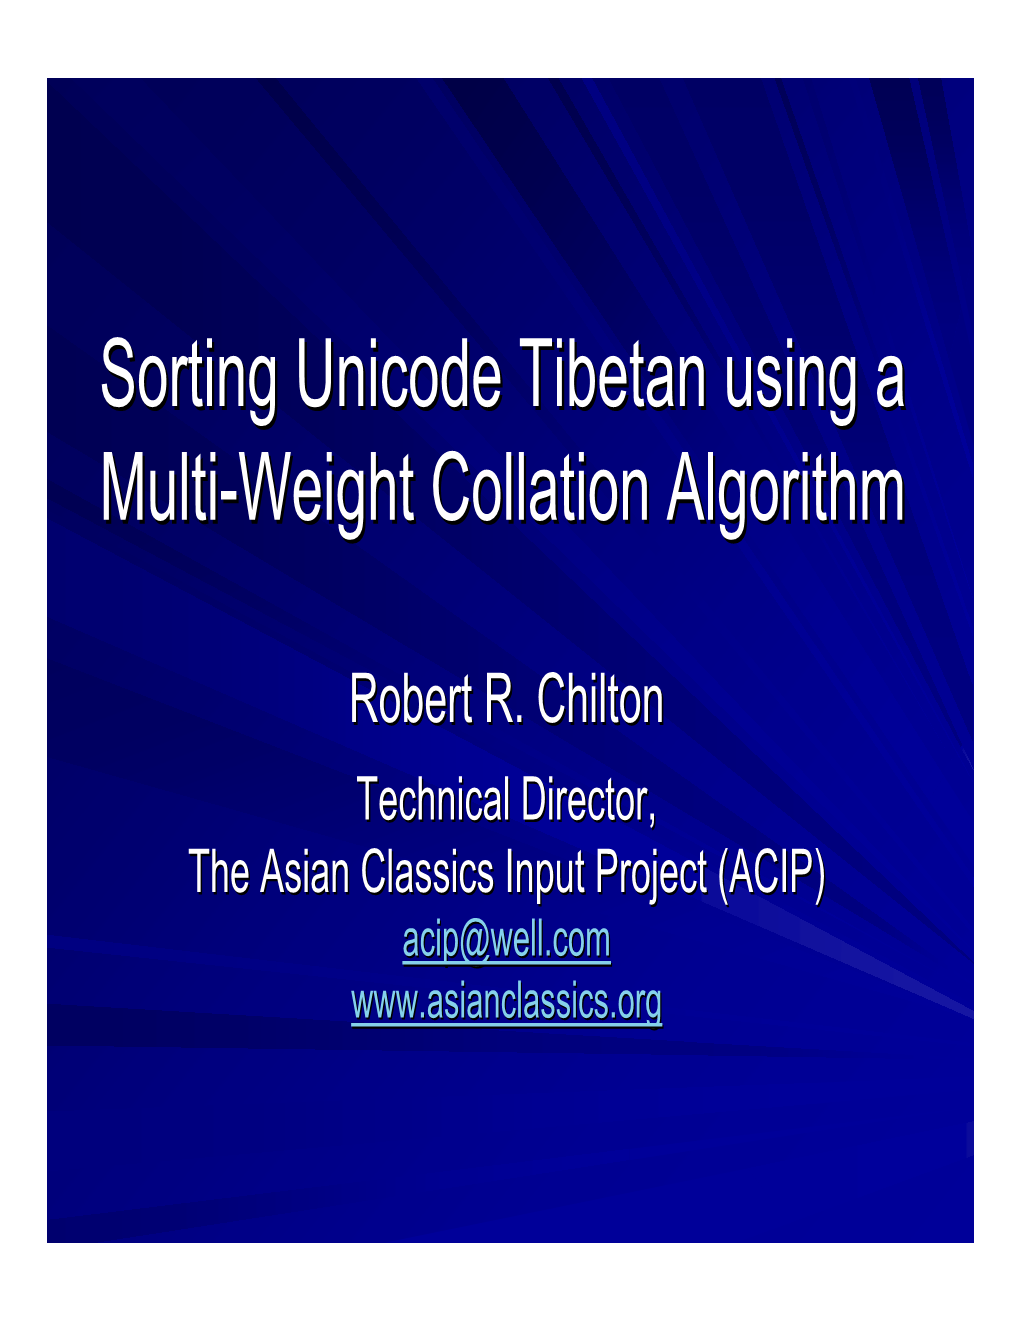 Sorting Unicode Tibetan Using a Multi-Weight Collation Algorithm